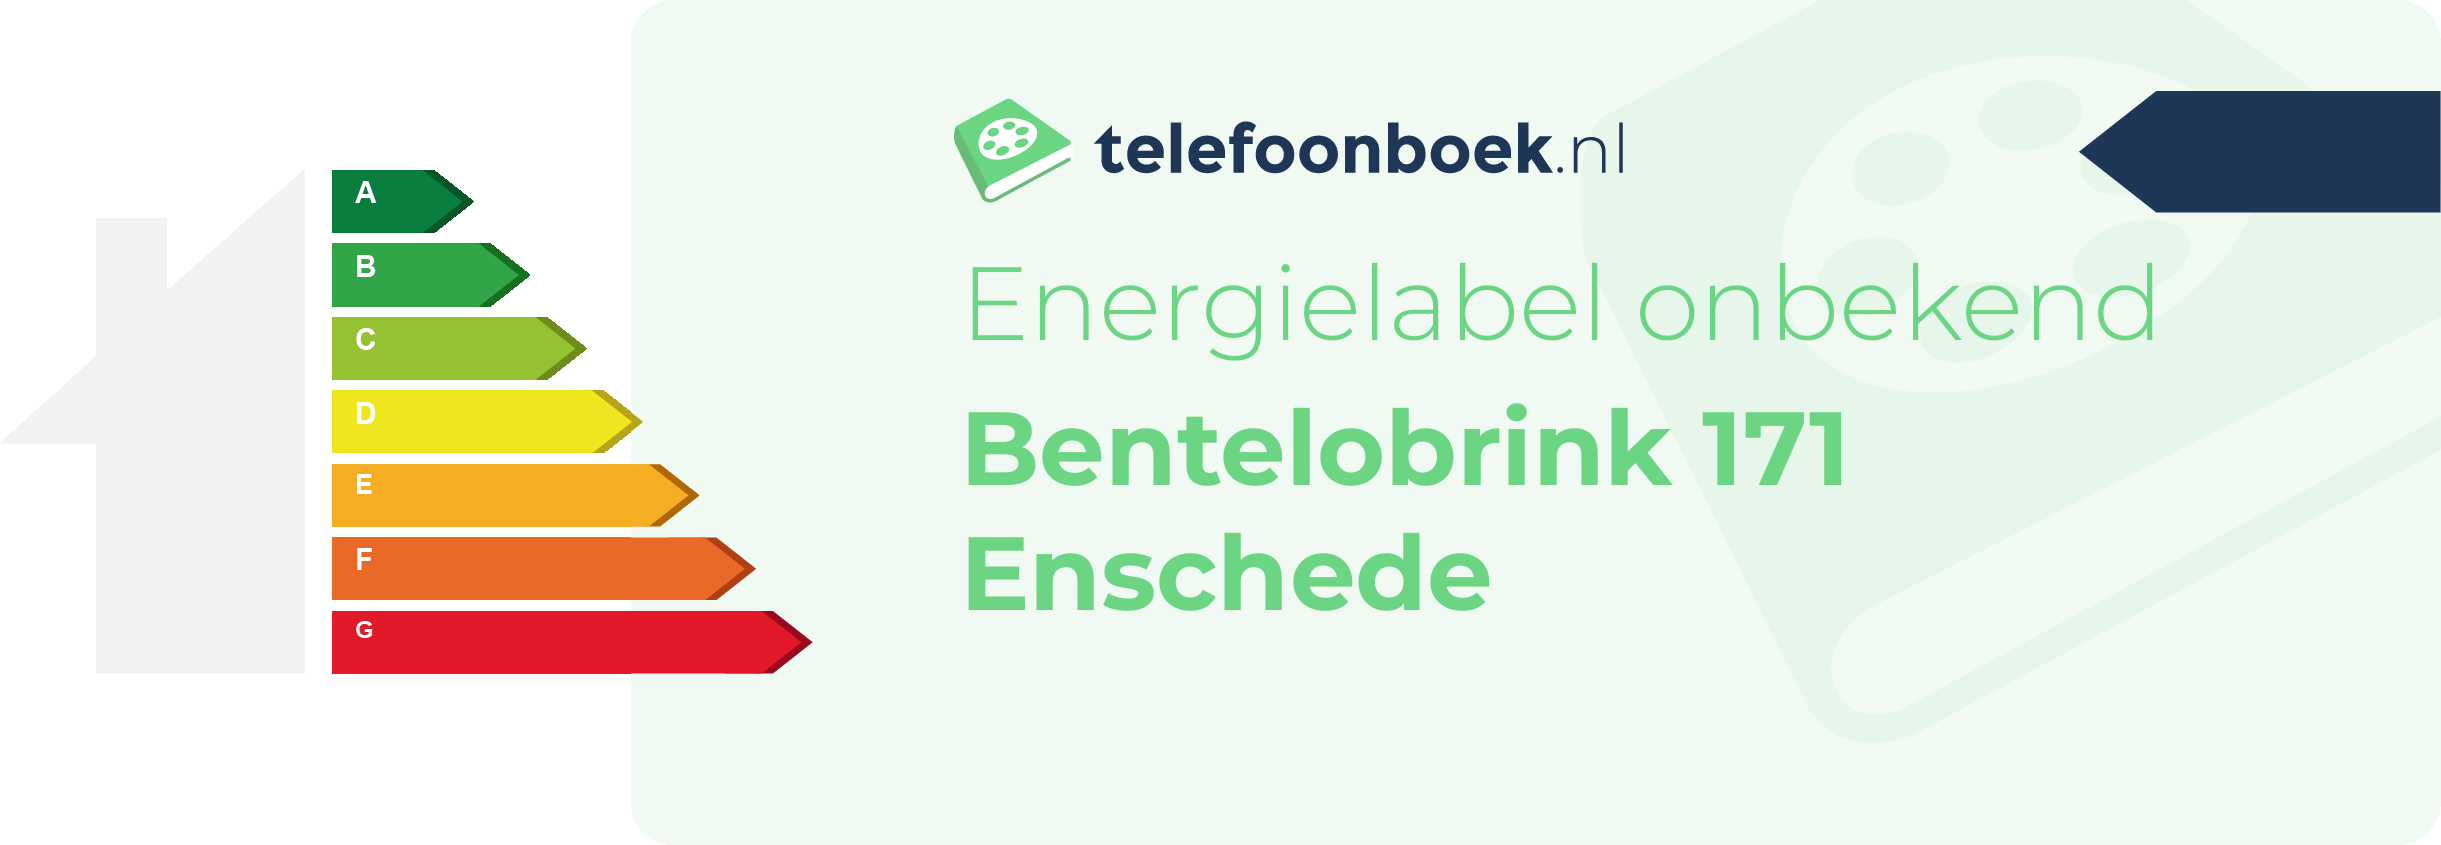 Energielabel Bentelobrink 171 Enschede